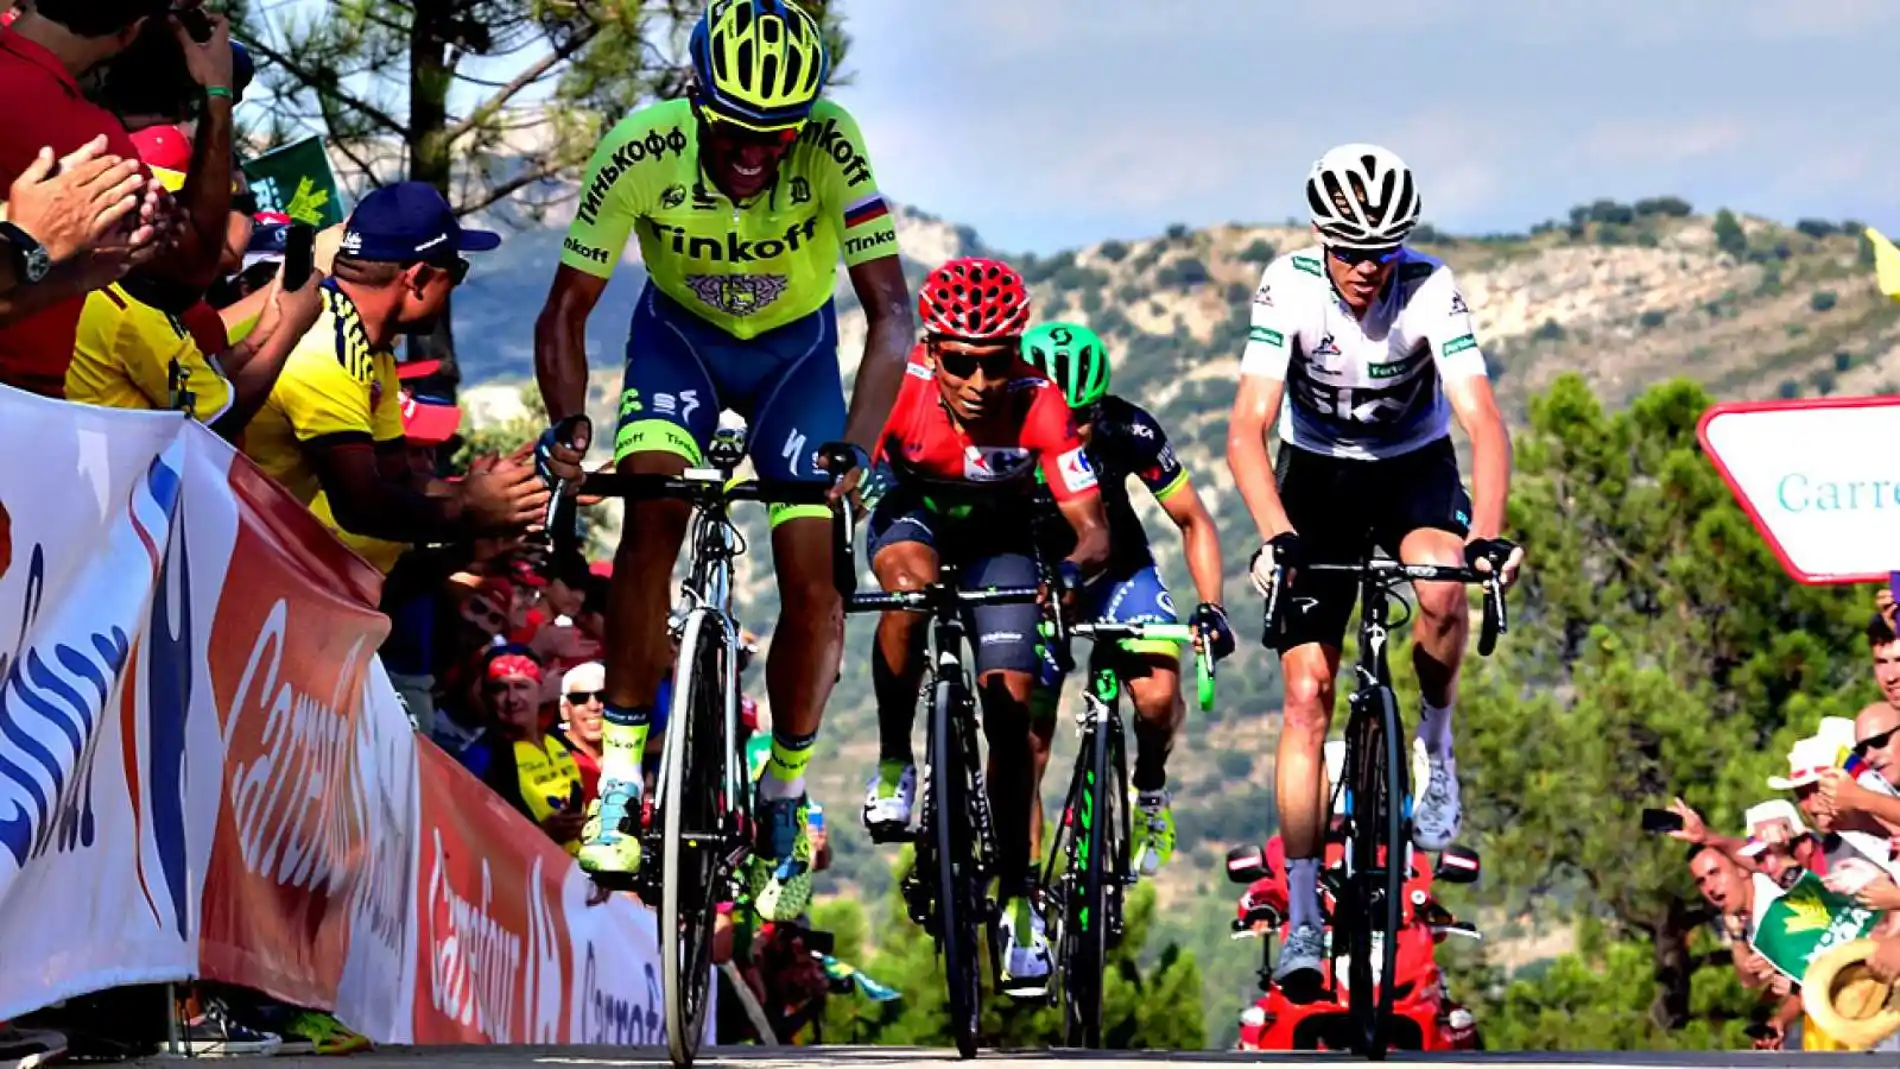 Imagen del ascenso al Mas de la Costa en La Vuelta 2016